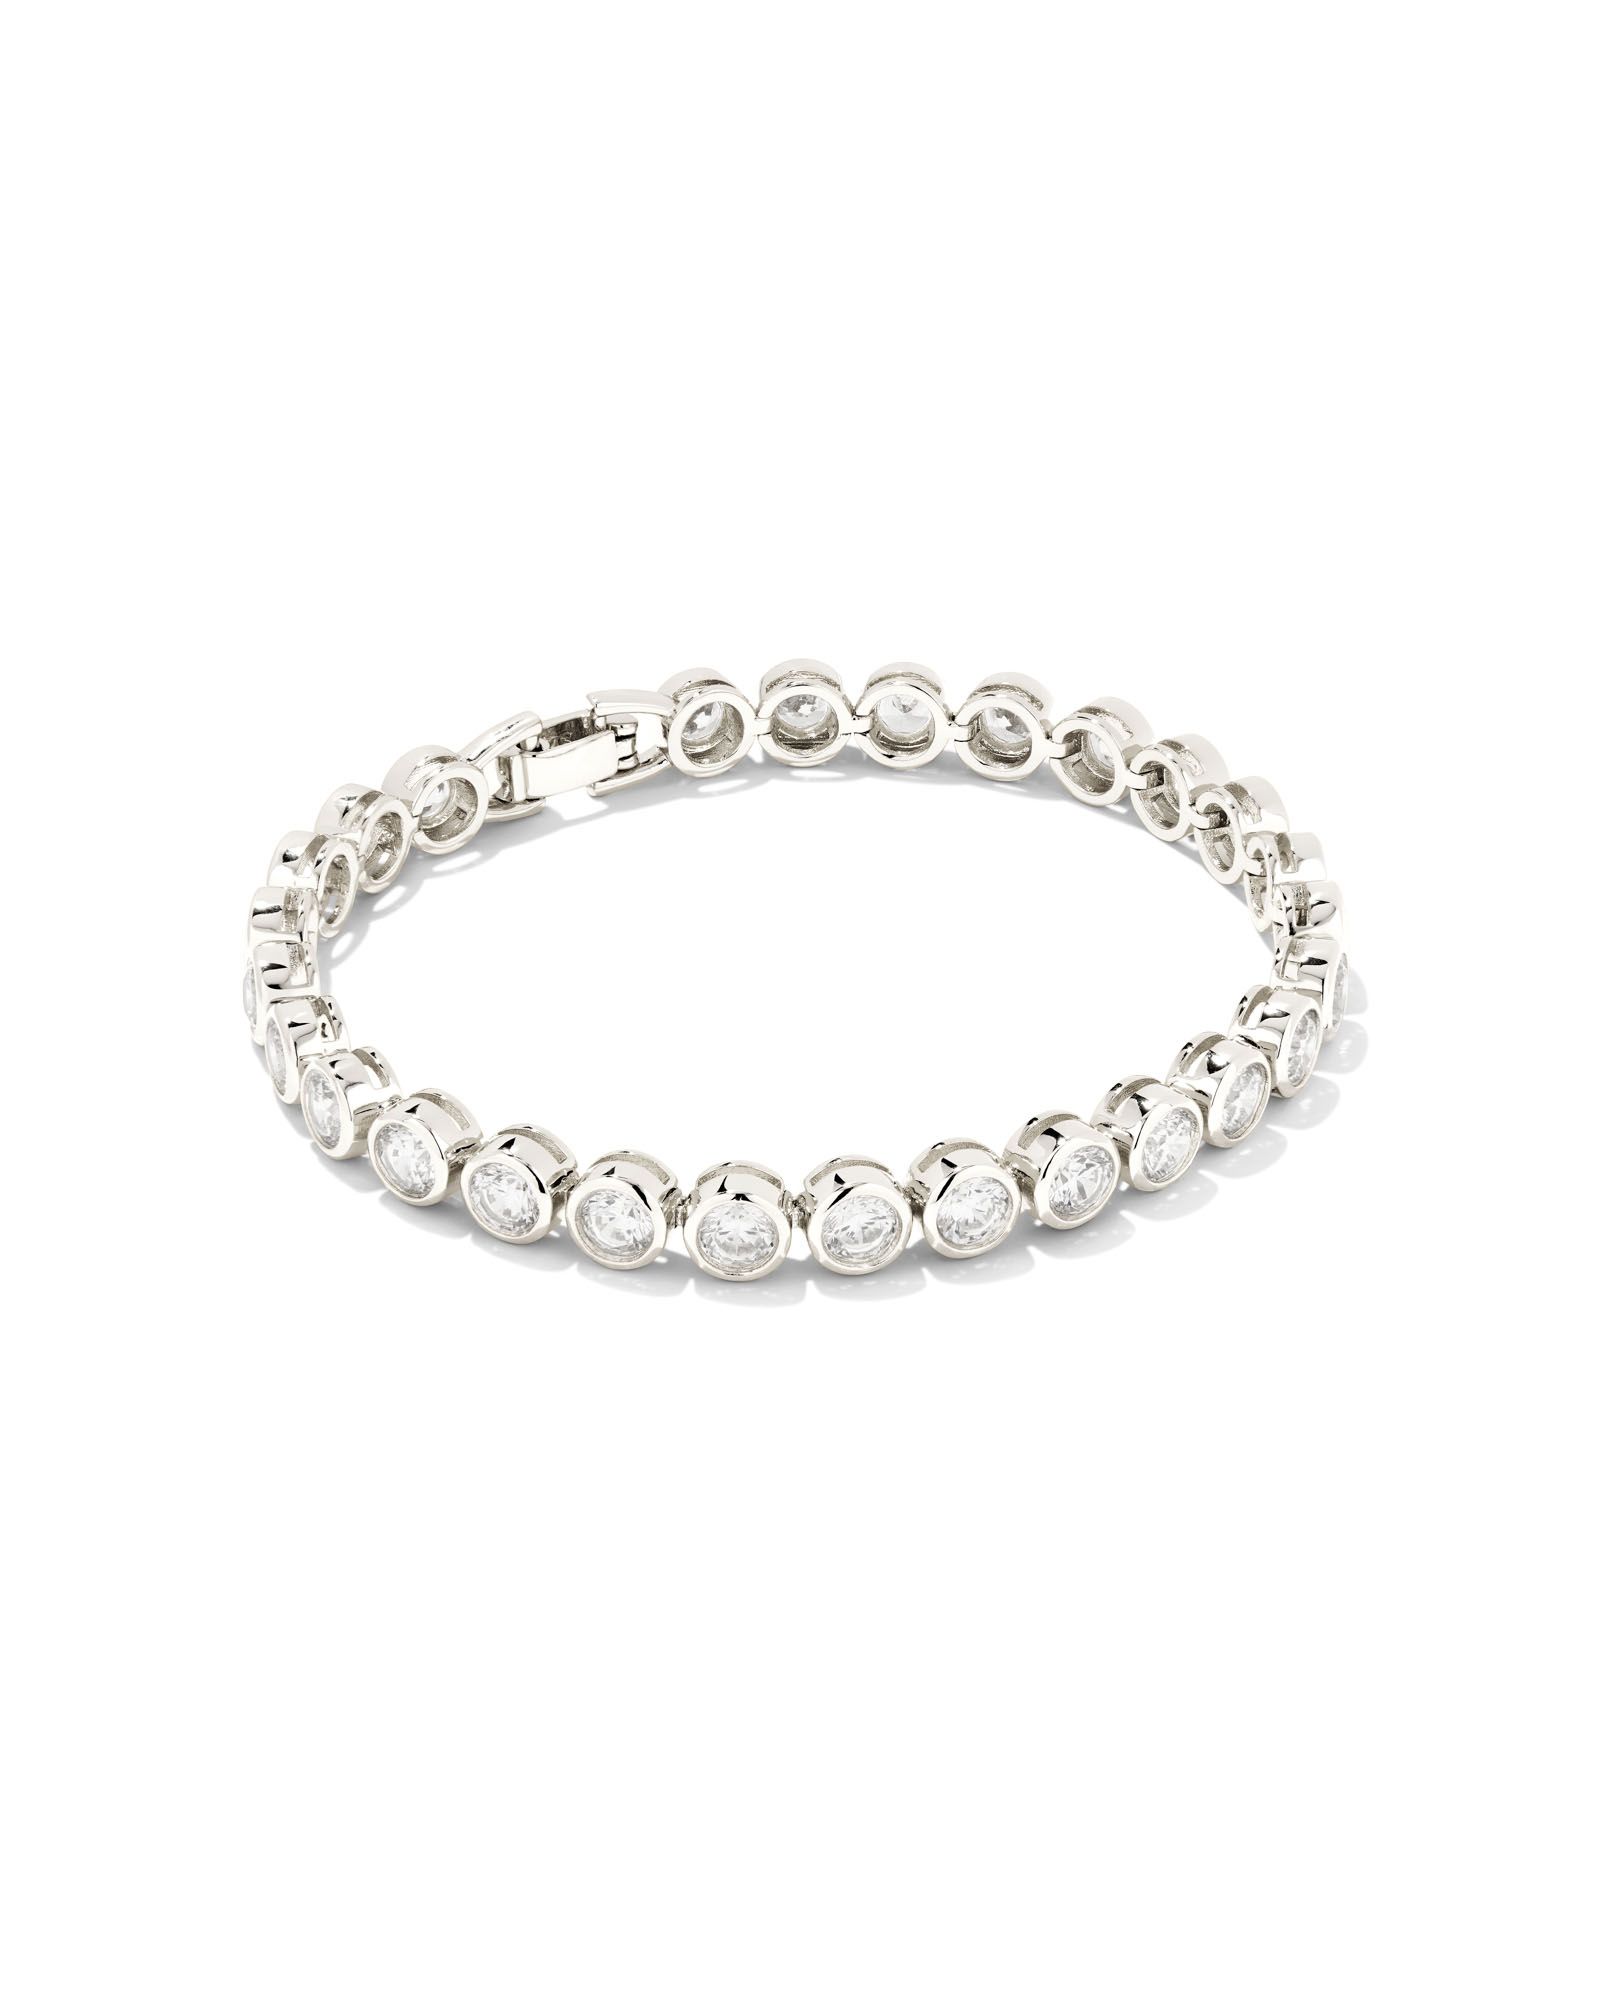 Carmen Bright Silver Tennis Bracelet in White Crystal | Kendra Scott | Kendra Scott